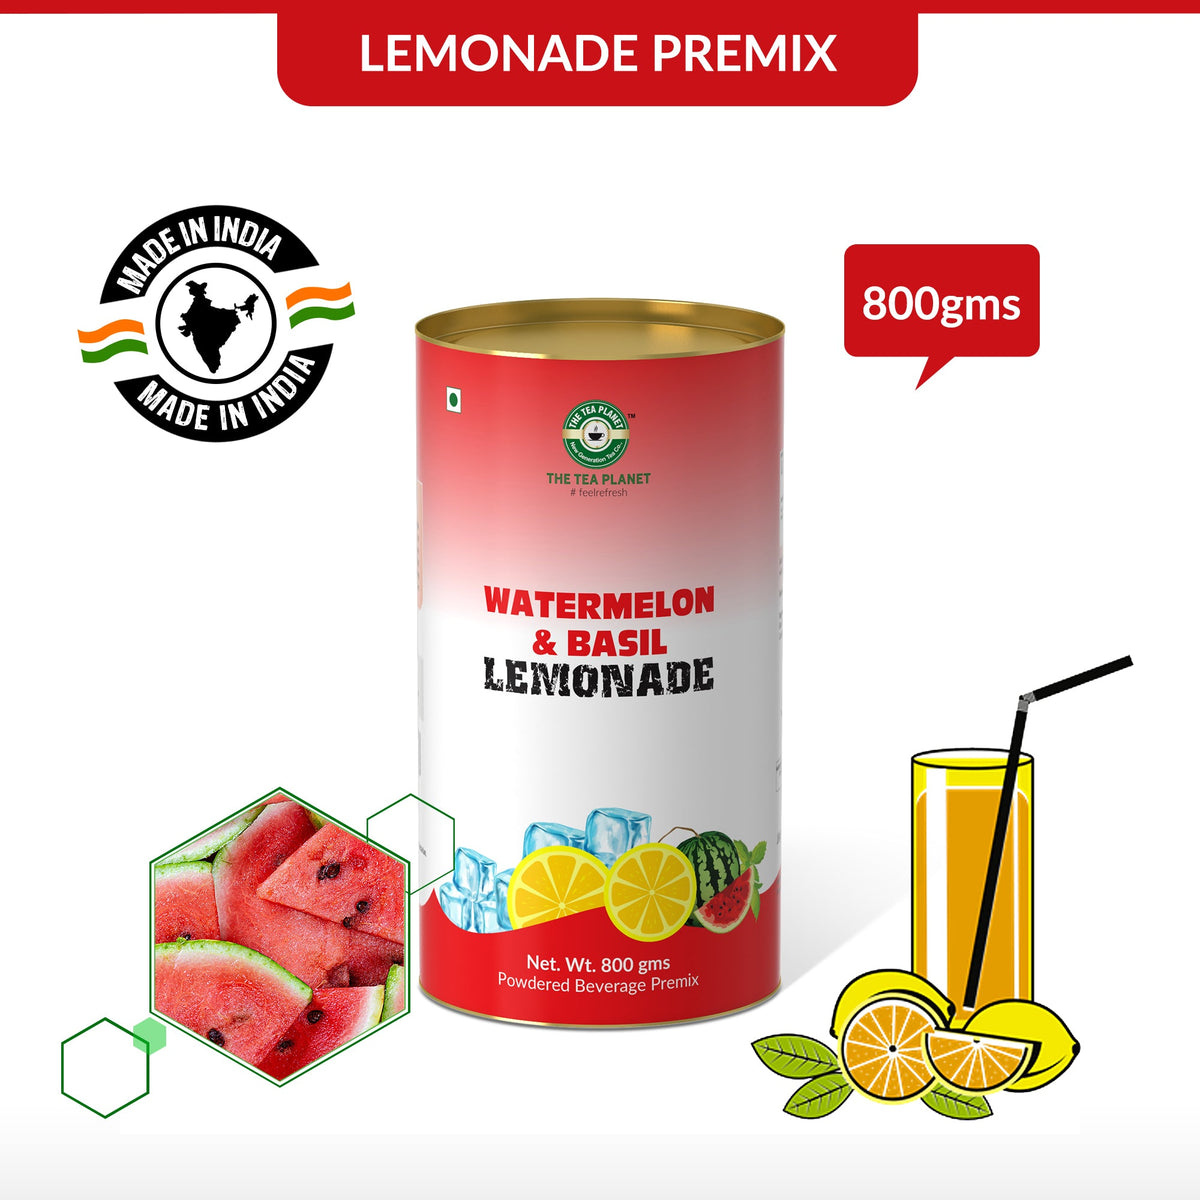 Watermelon & Basil Lemonade Premix